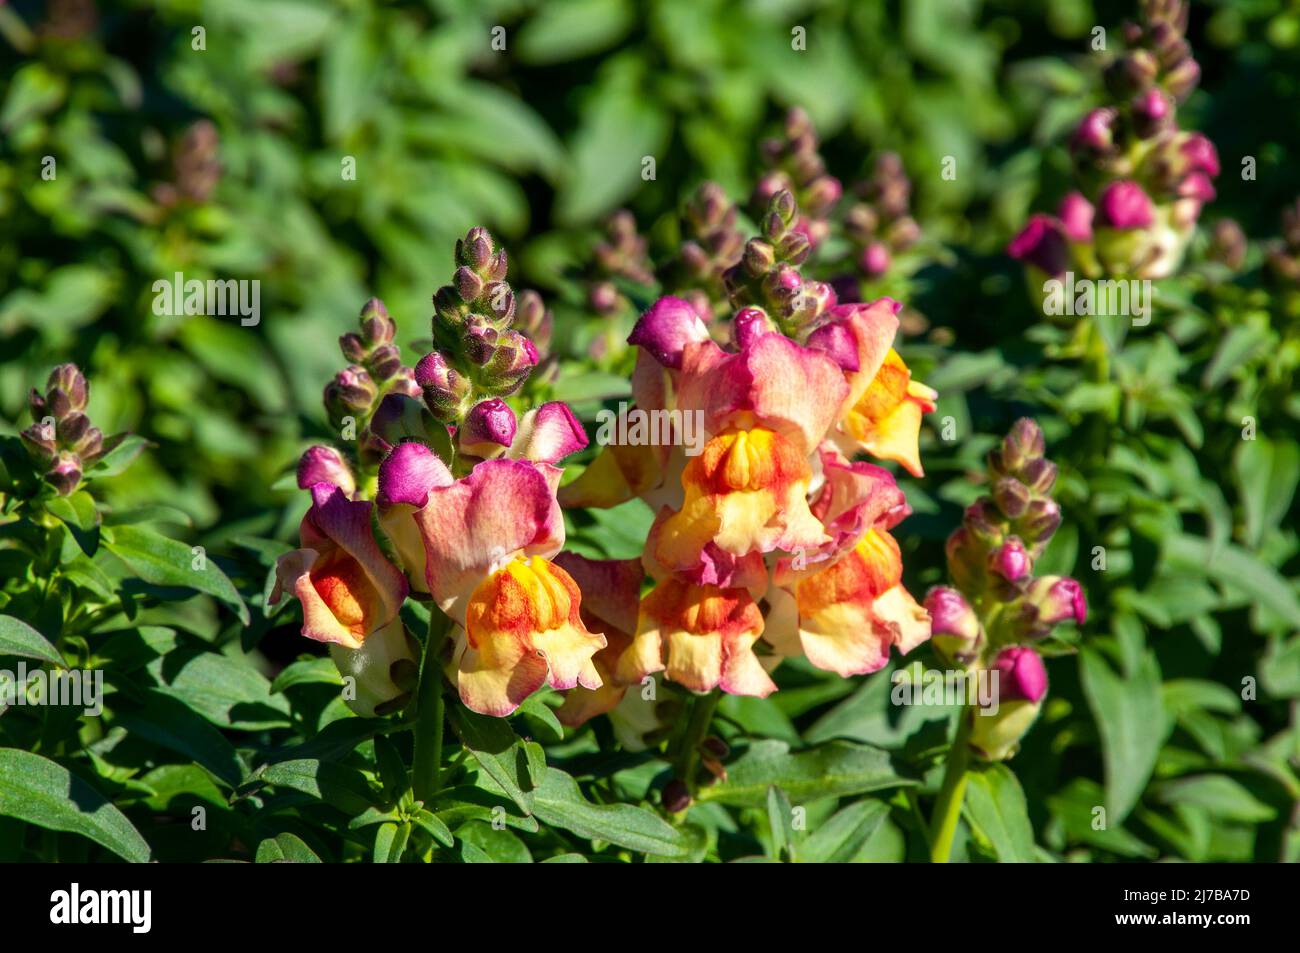 Sydney Australia, multicolored snapdragon flowers in garden Stock Photo